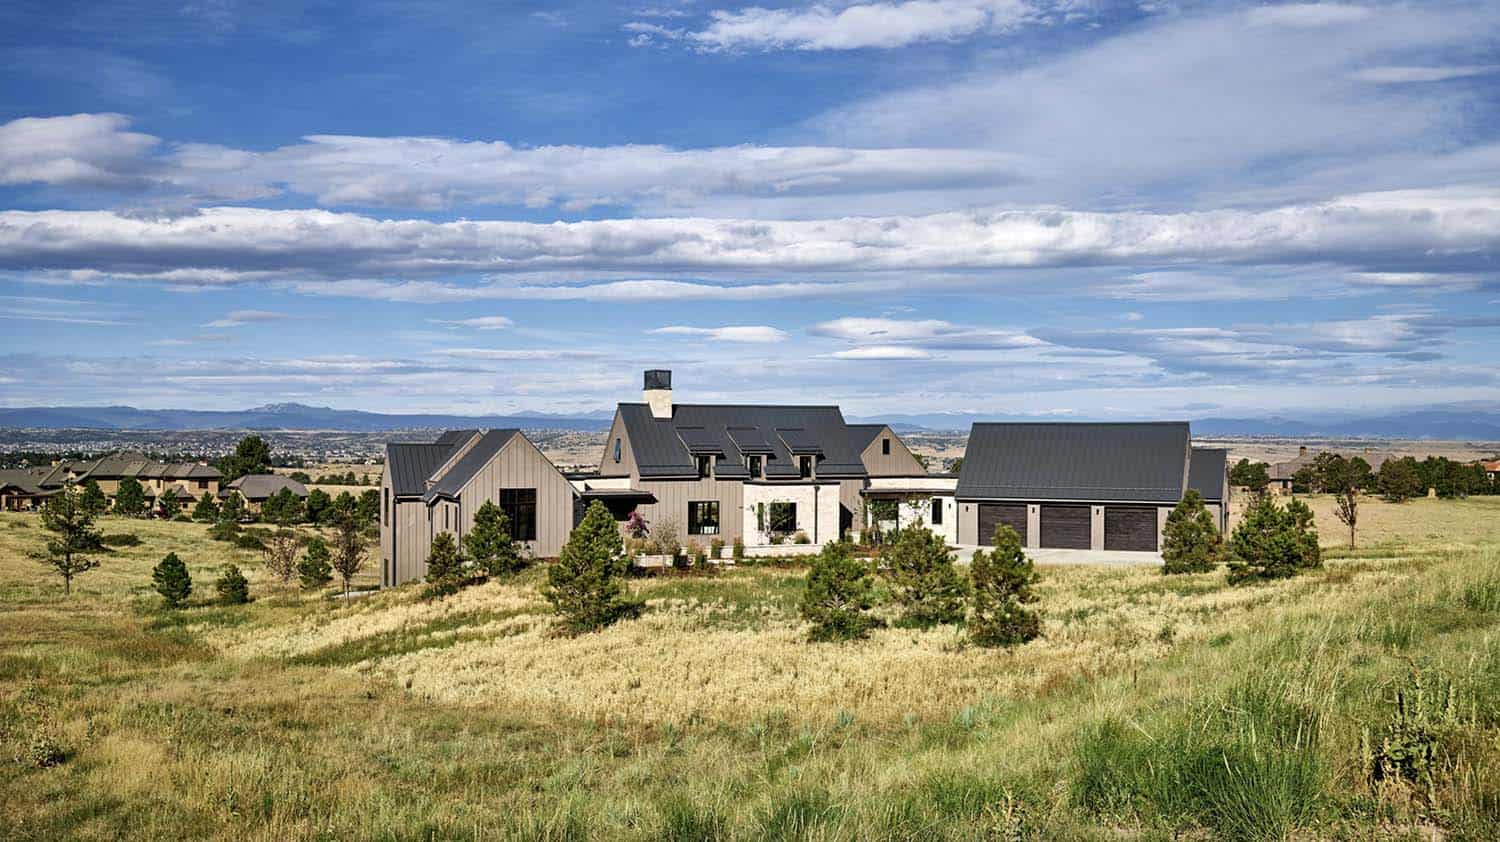 contemporary-farmhouse-home-exterior